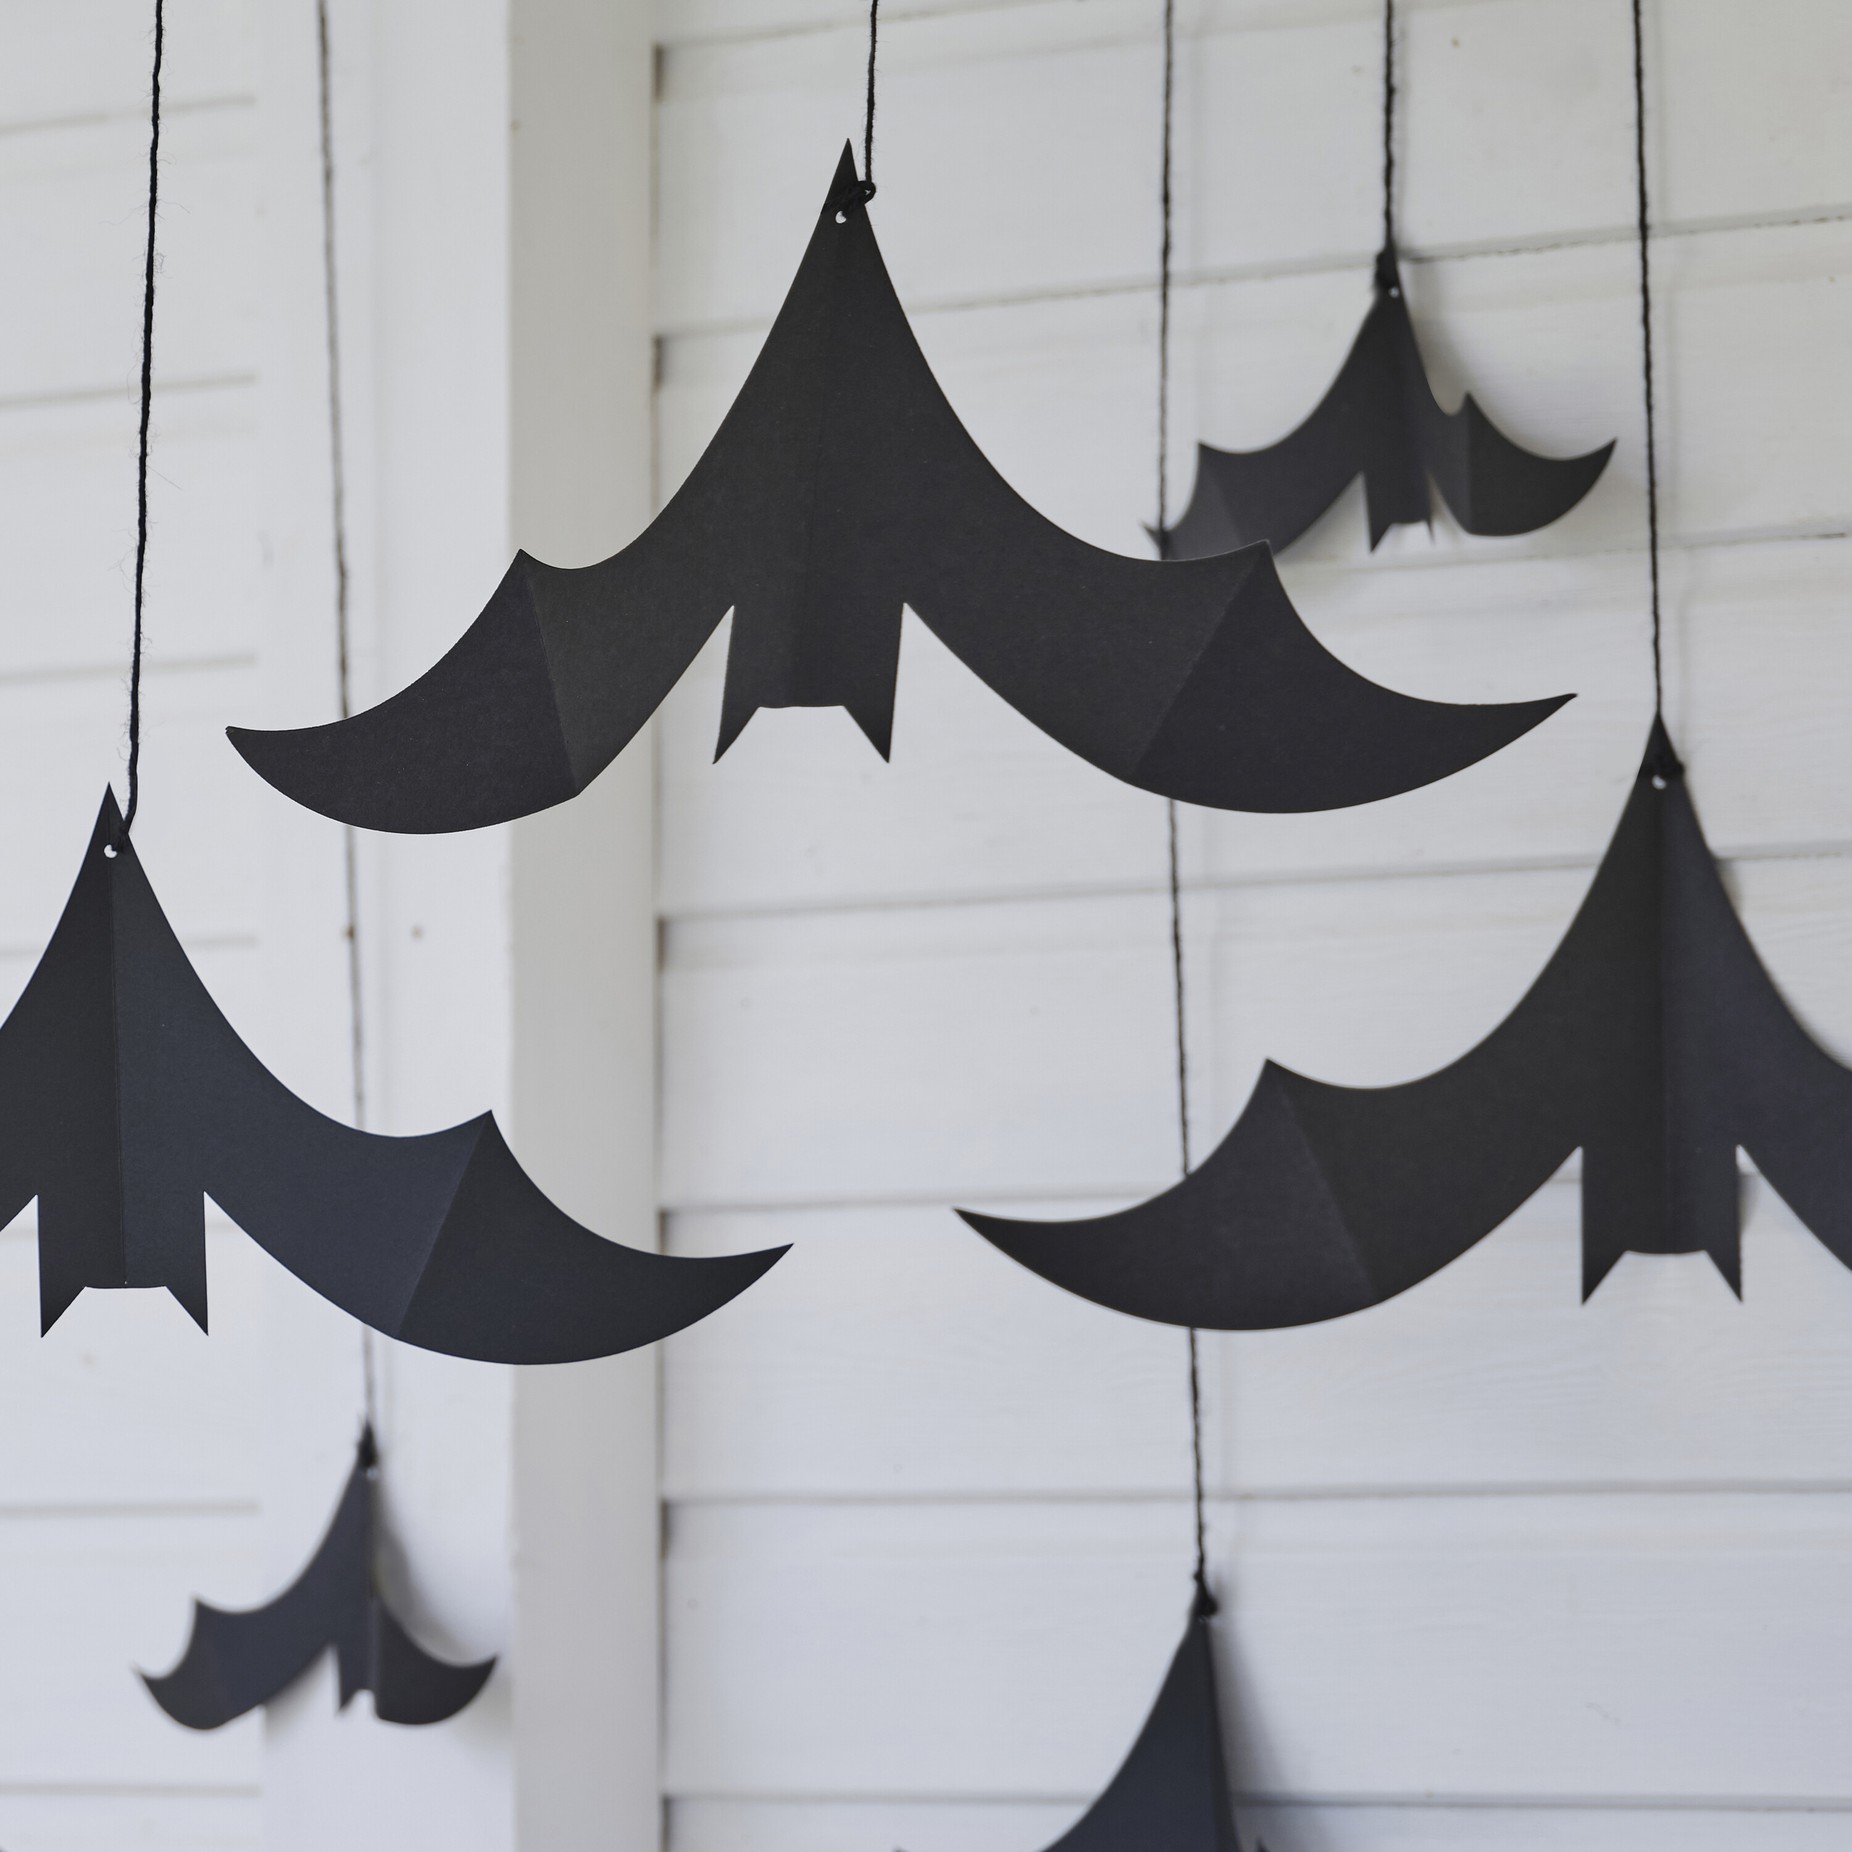 Hanging Decoration - Black Bats